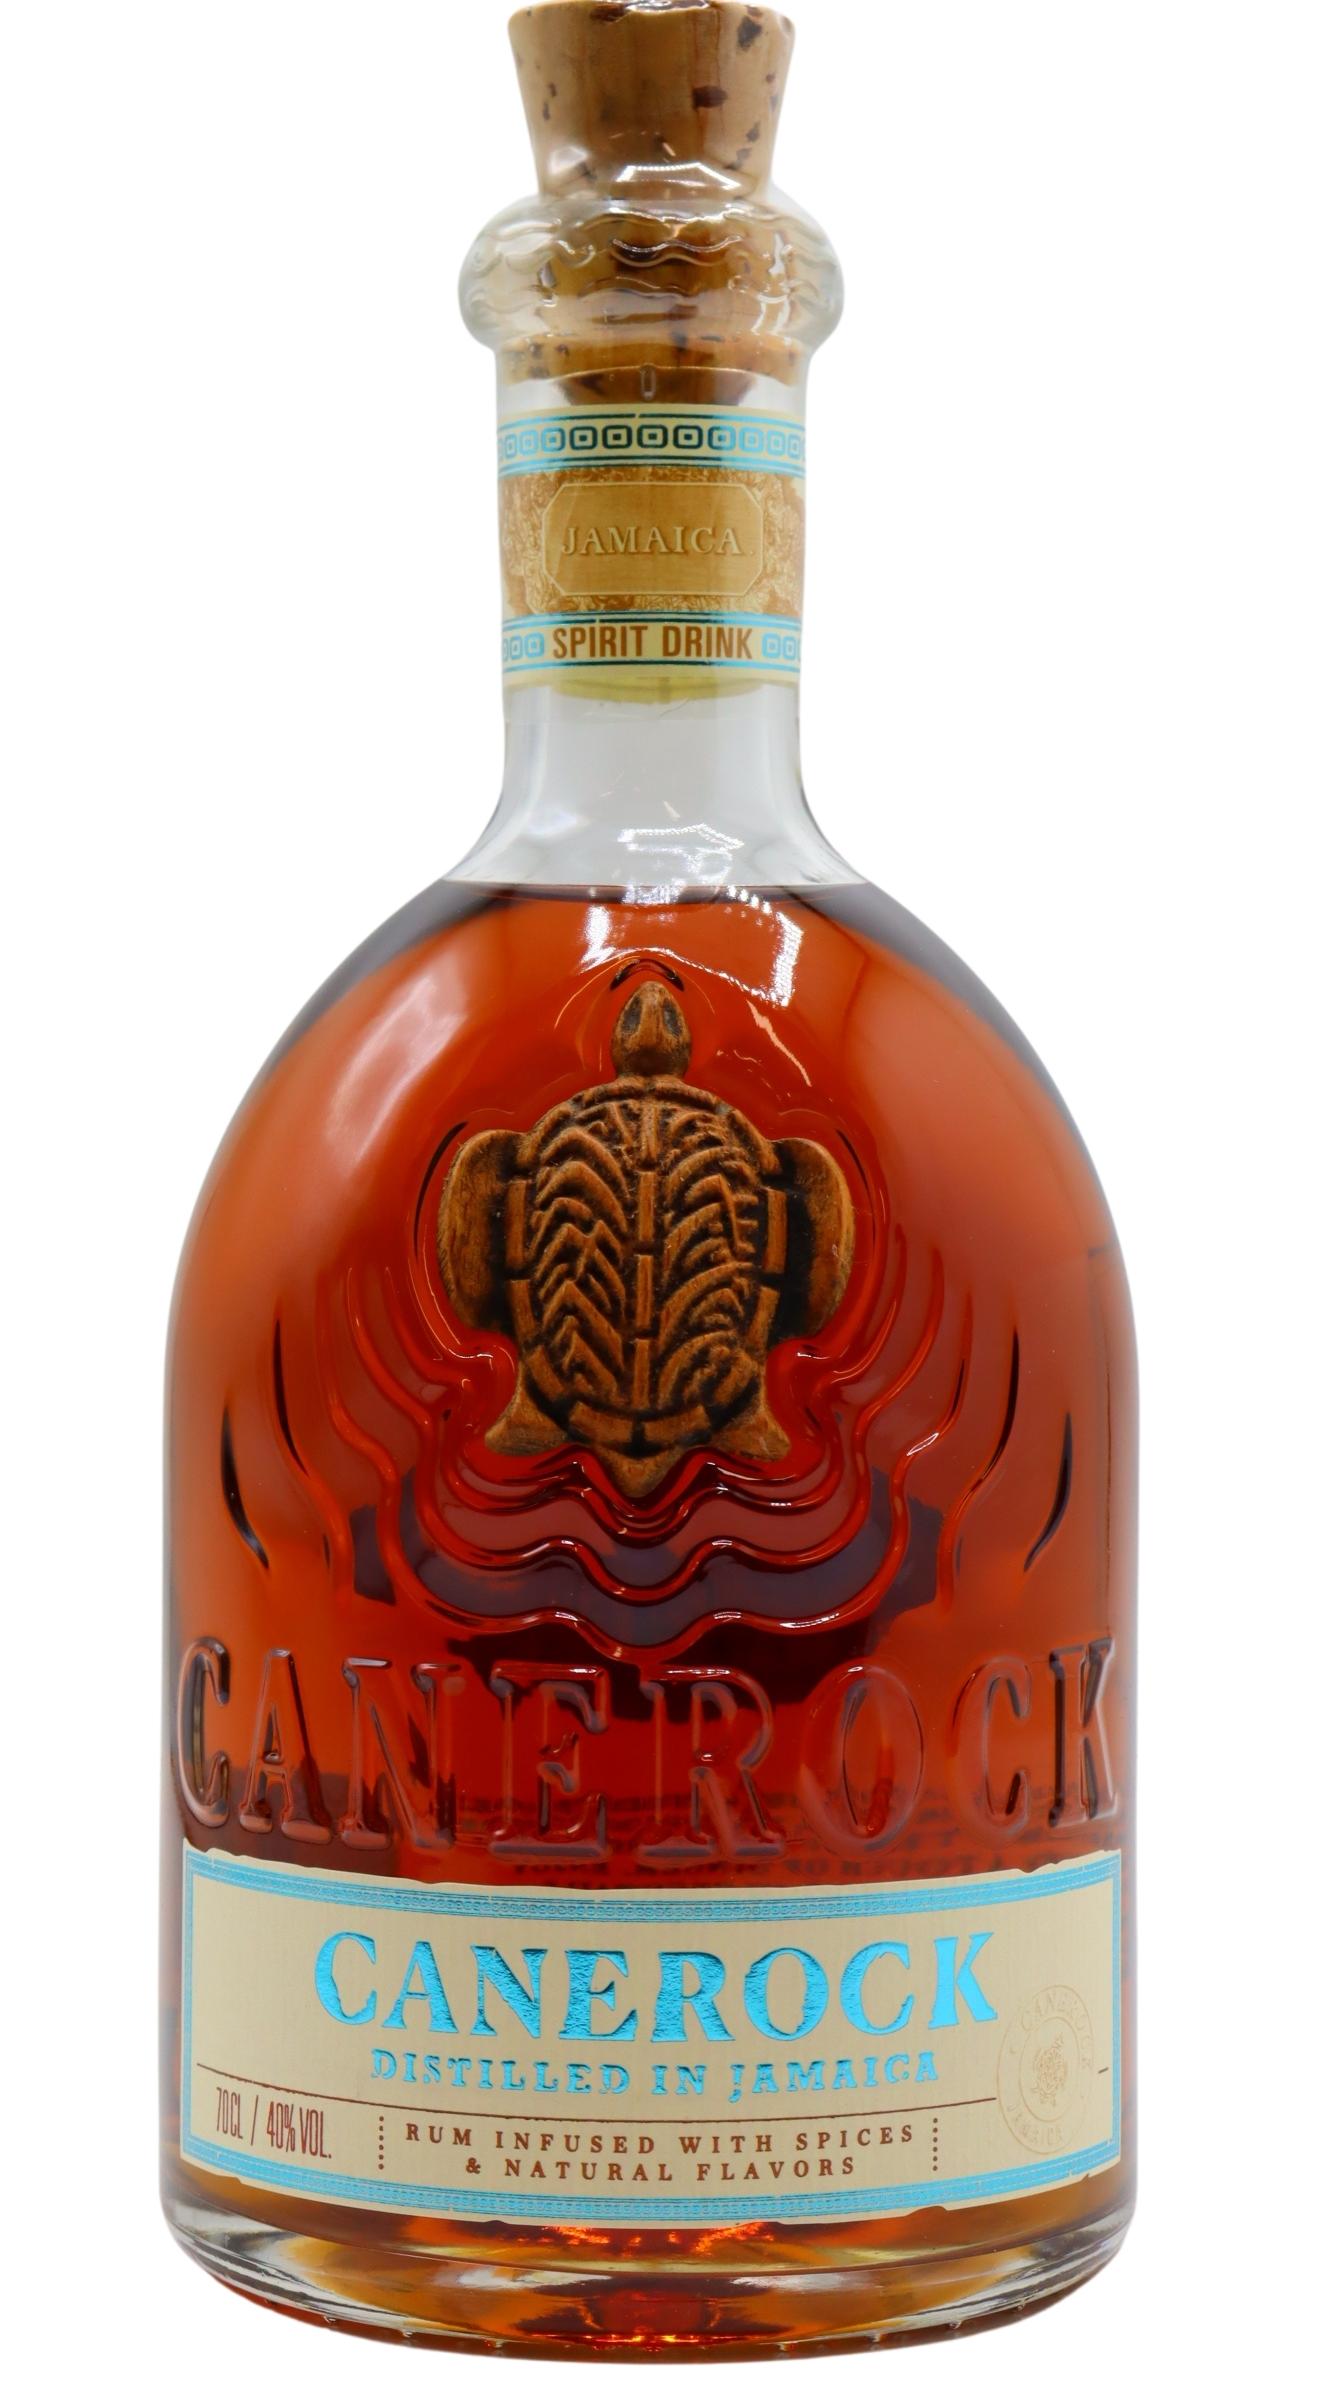 Canerock - Jamaican Spiced Rum